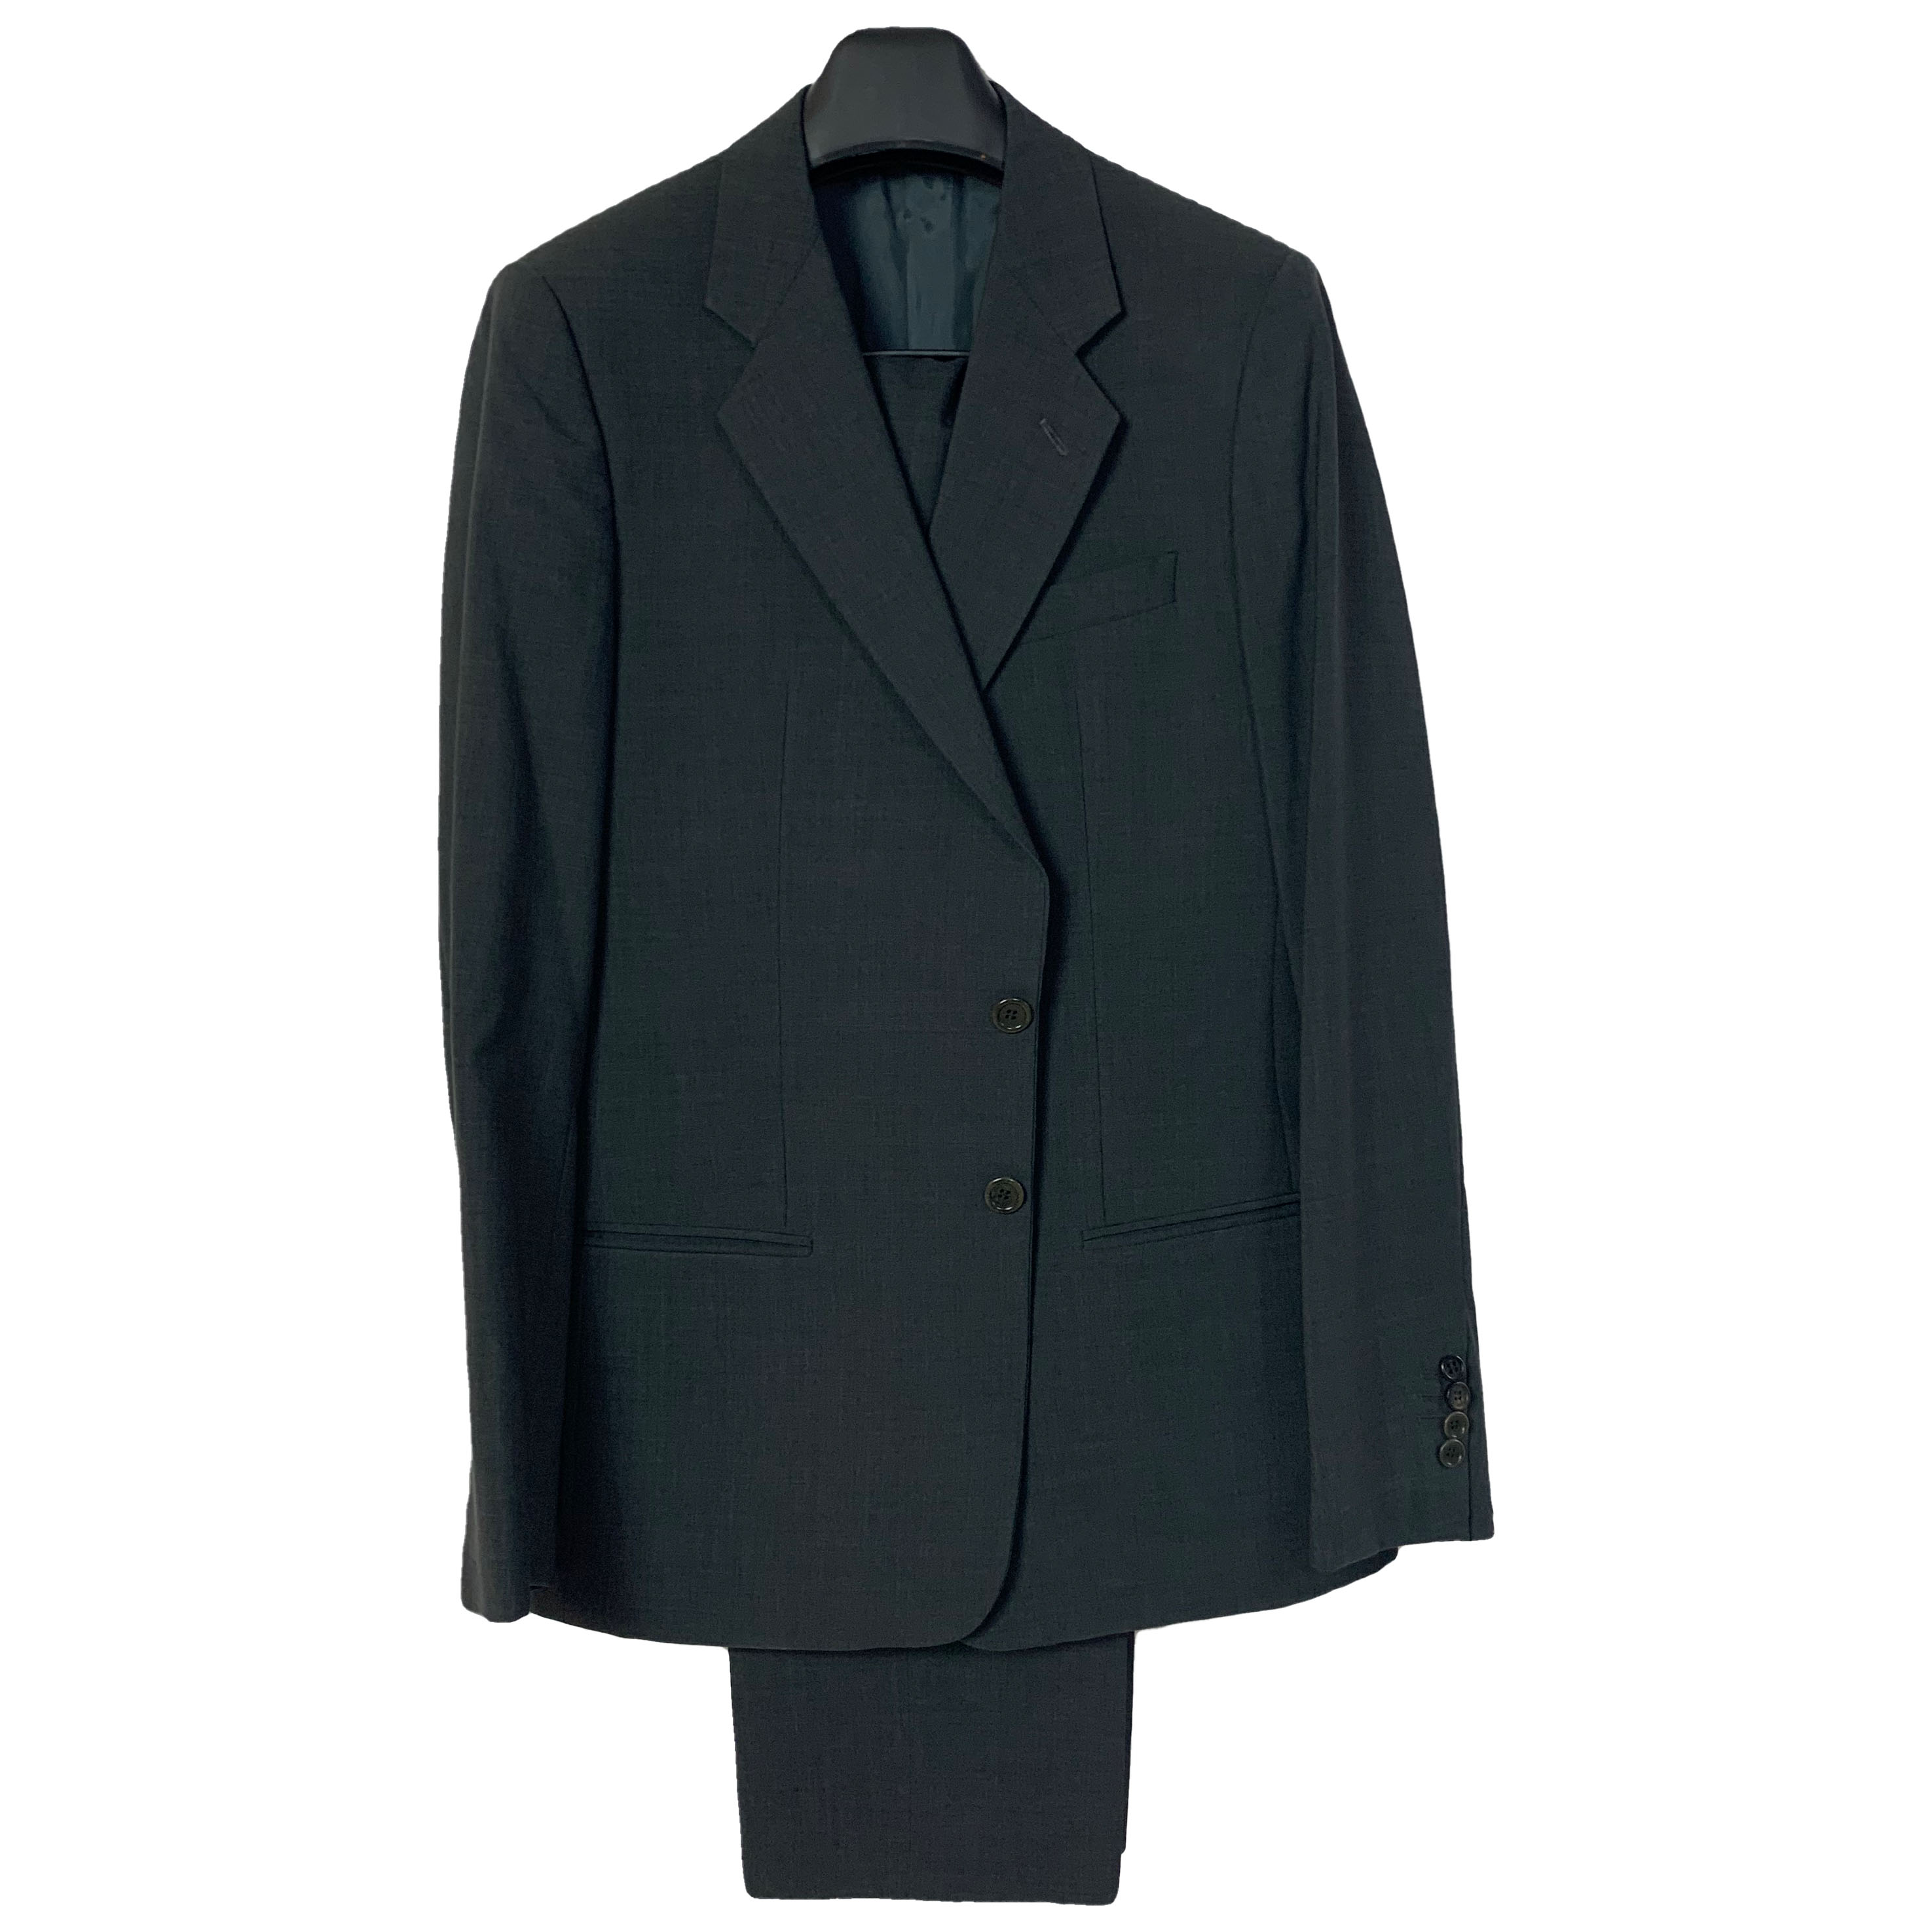 [Armani Collezioni] Gray Suit - Size 48